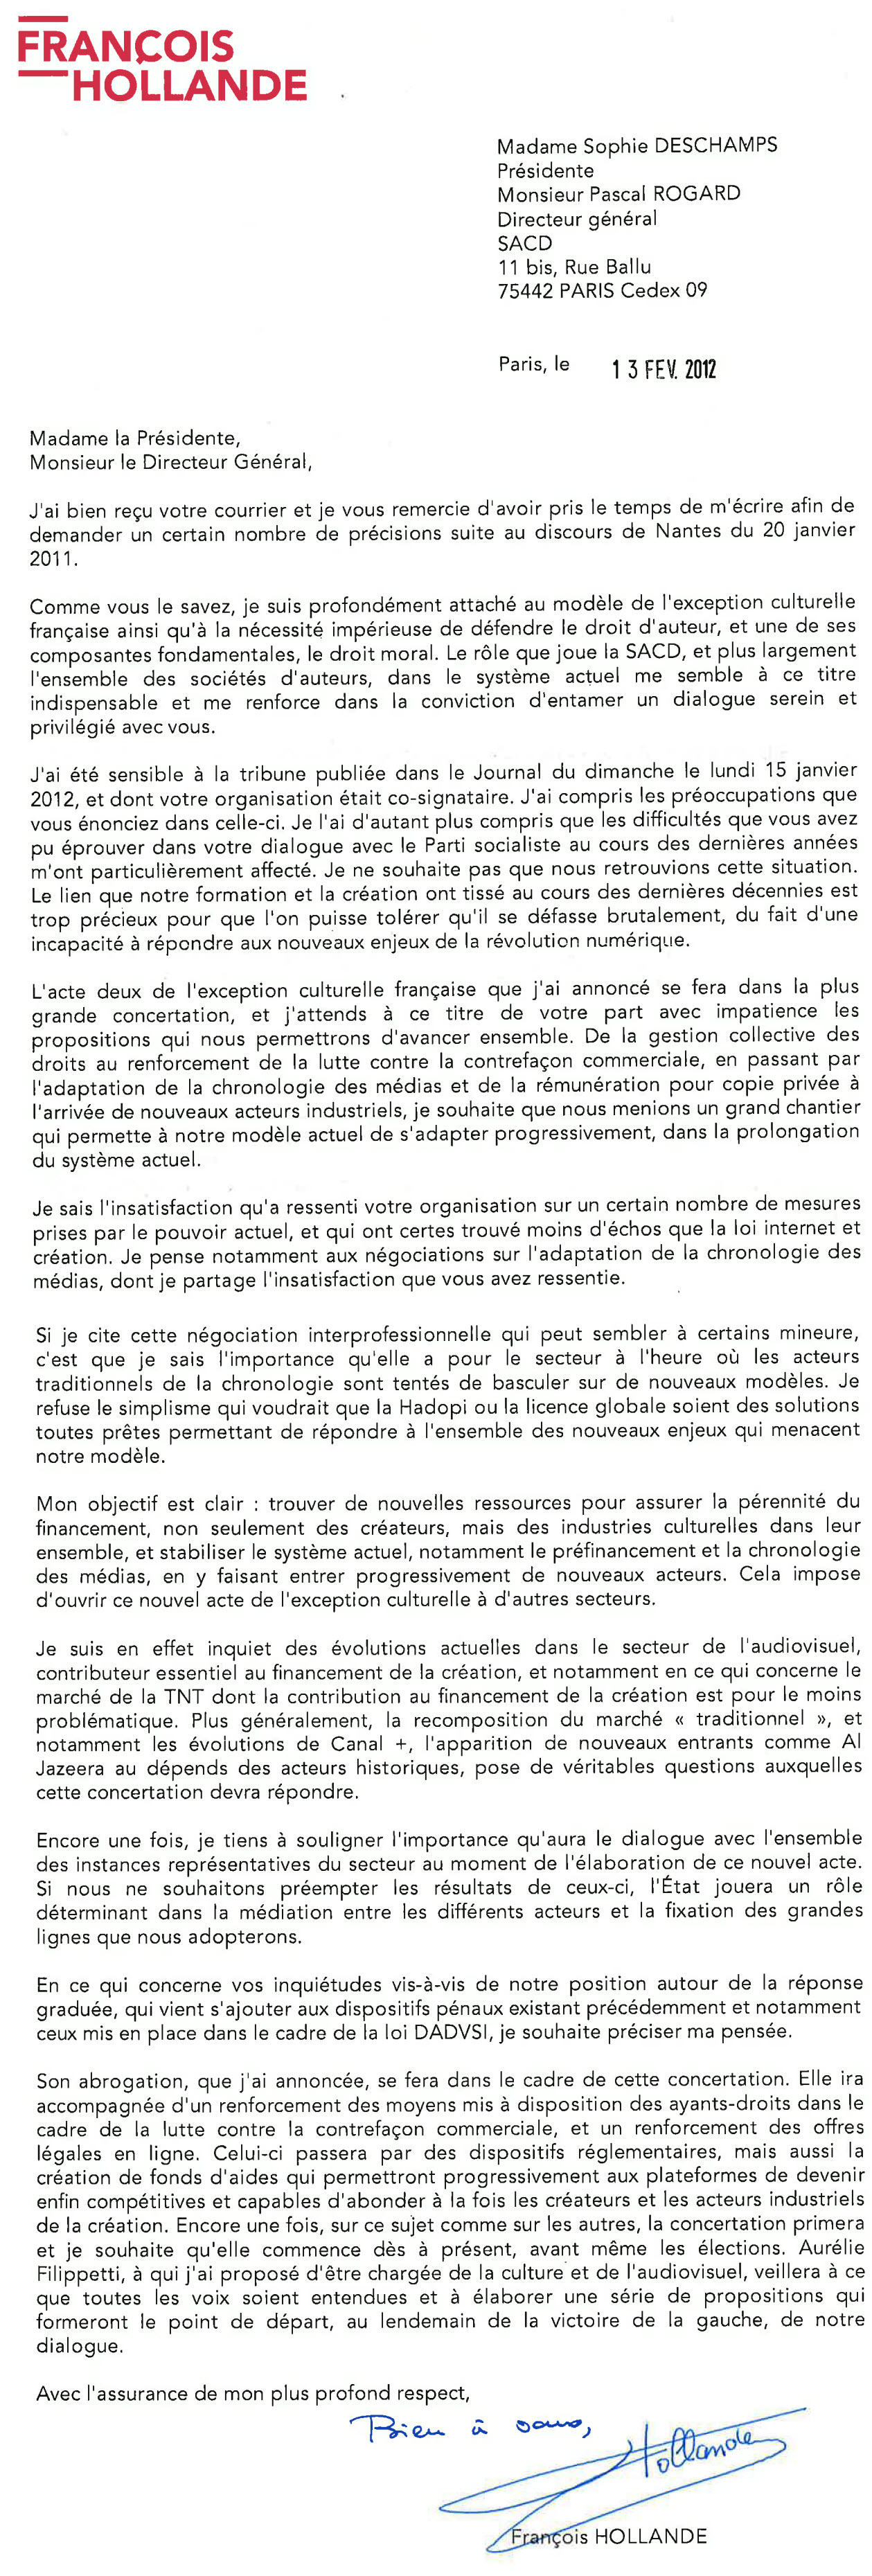 François Hollande confirme sa décision d'abroger la Hadopi